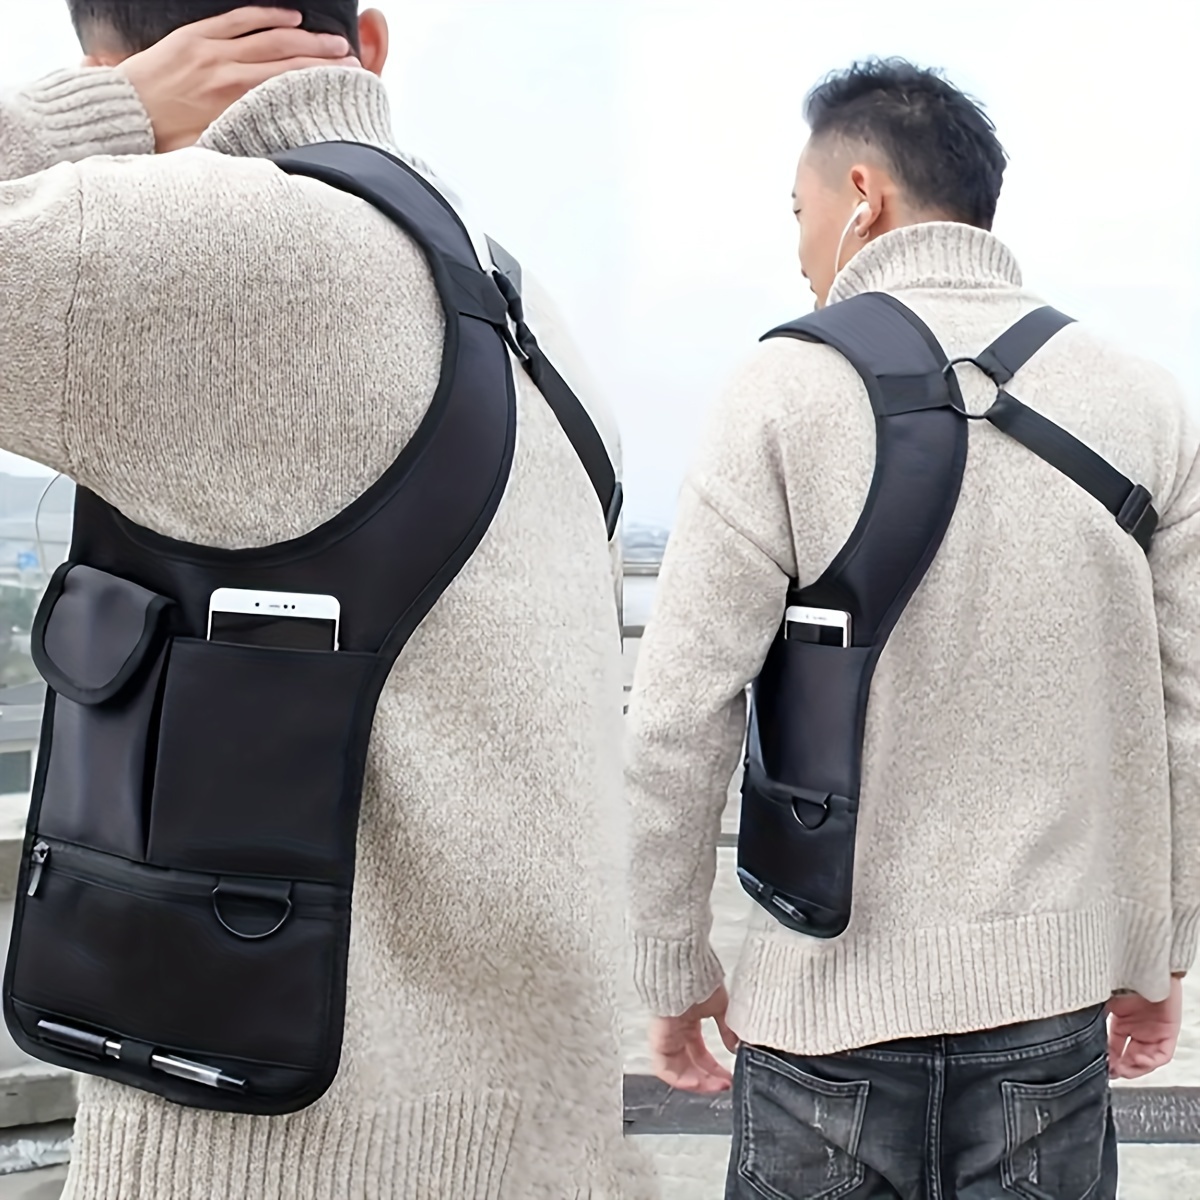 

1pc Men's Anti-theft Hidden Underarm Bag, Trendy Mobile Phone Bag, Close-fitting Satchel Bag